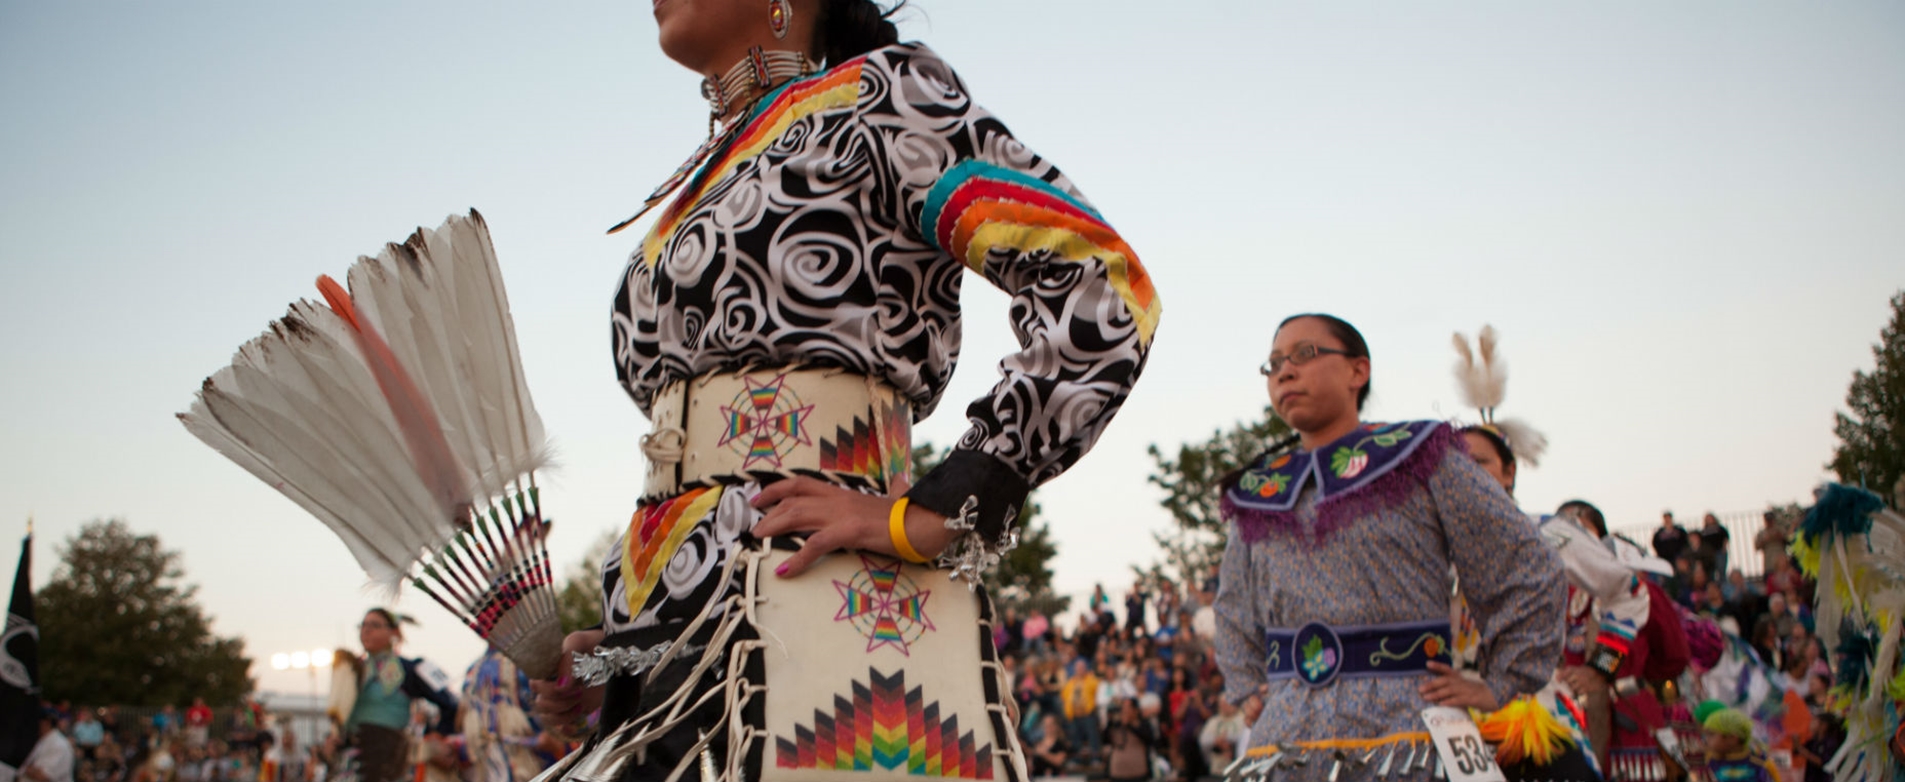 Native American Dancers at Indian Summer Festival